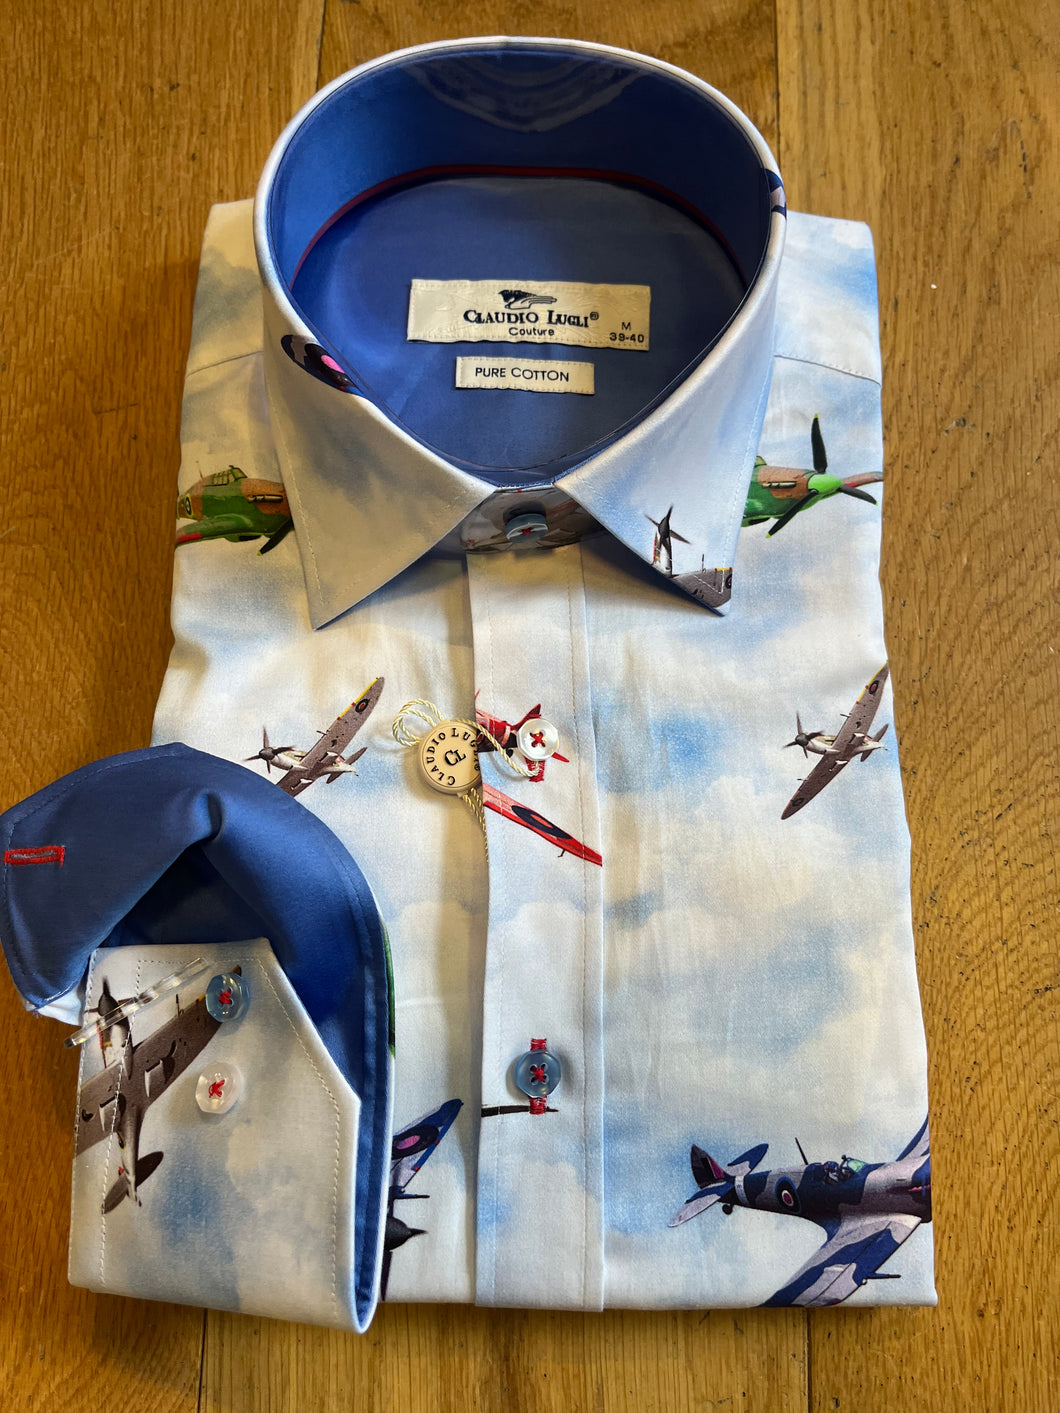 New Claudio Lugli Spitfire Shirt